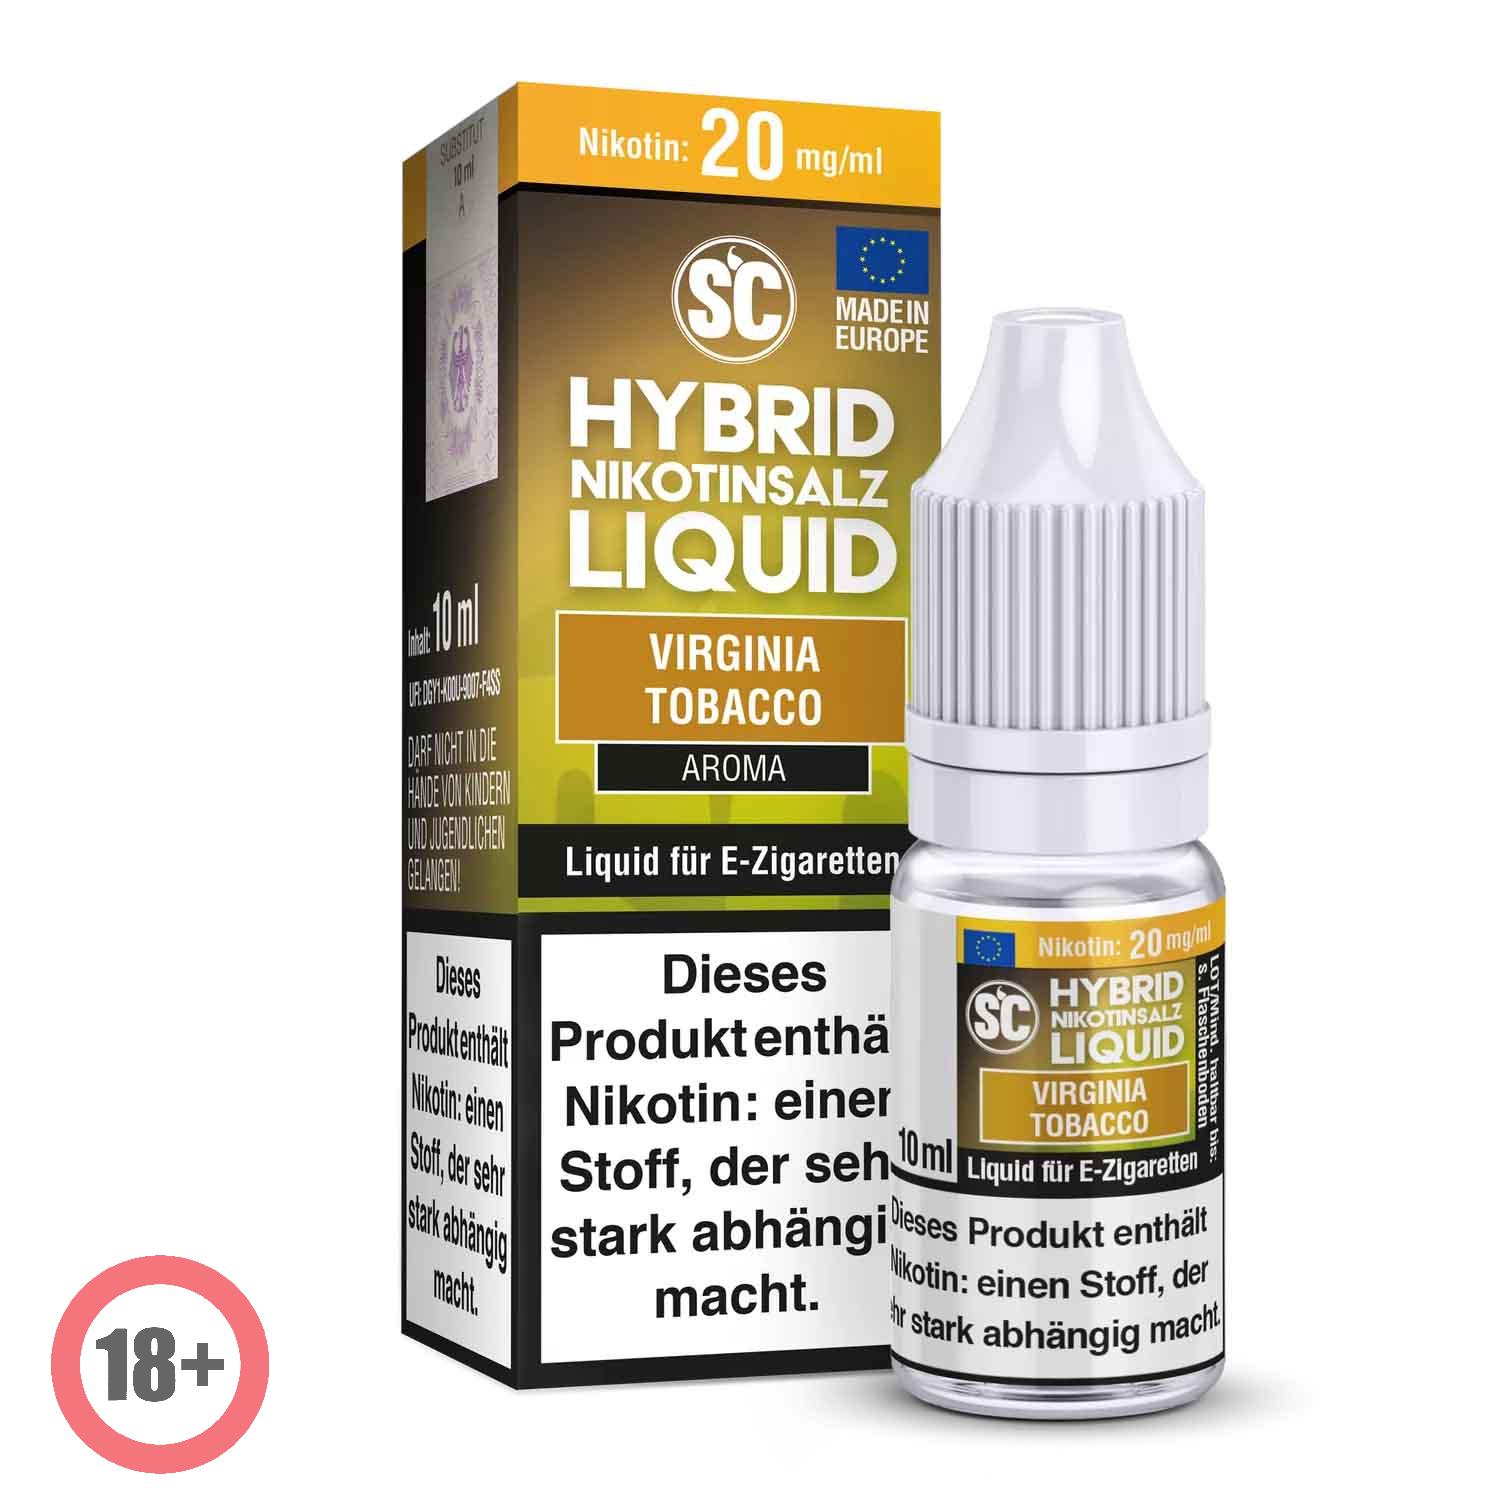 SC - Virginia Tobacco Hybrid Nikotinsalz Liquid ✅ Günstig kaufen! 